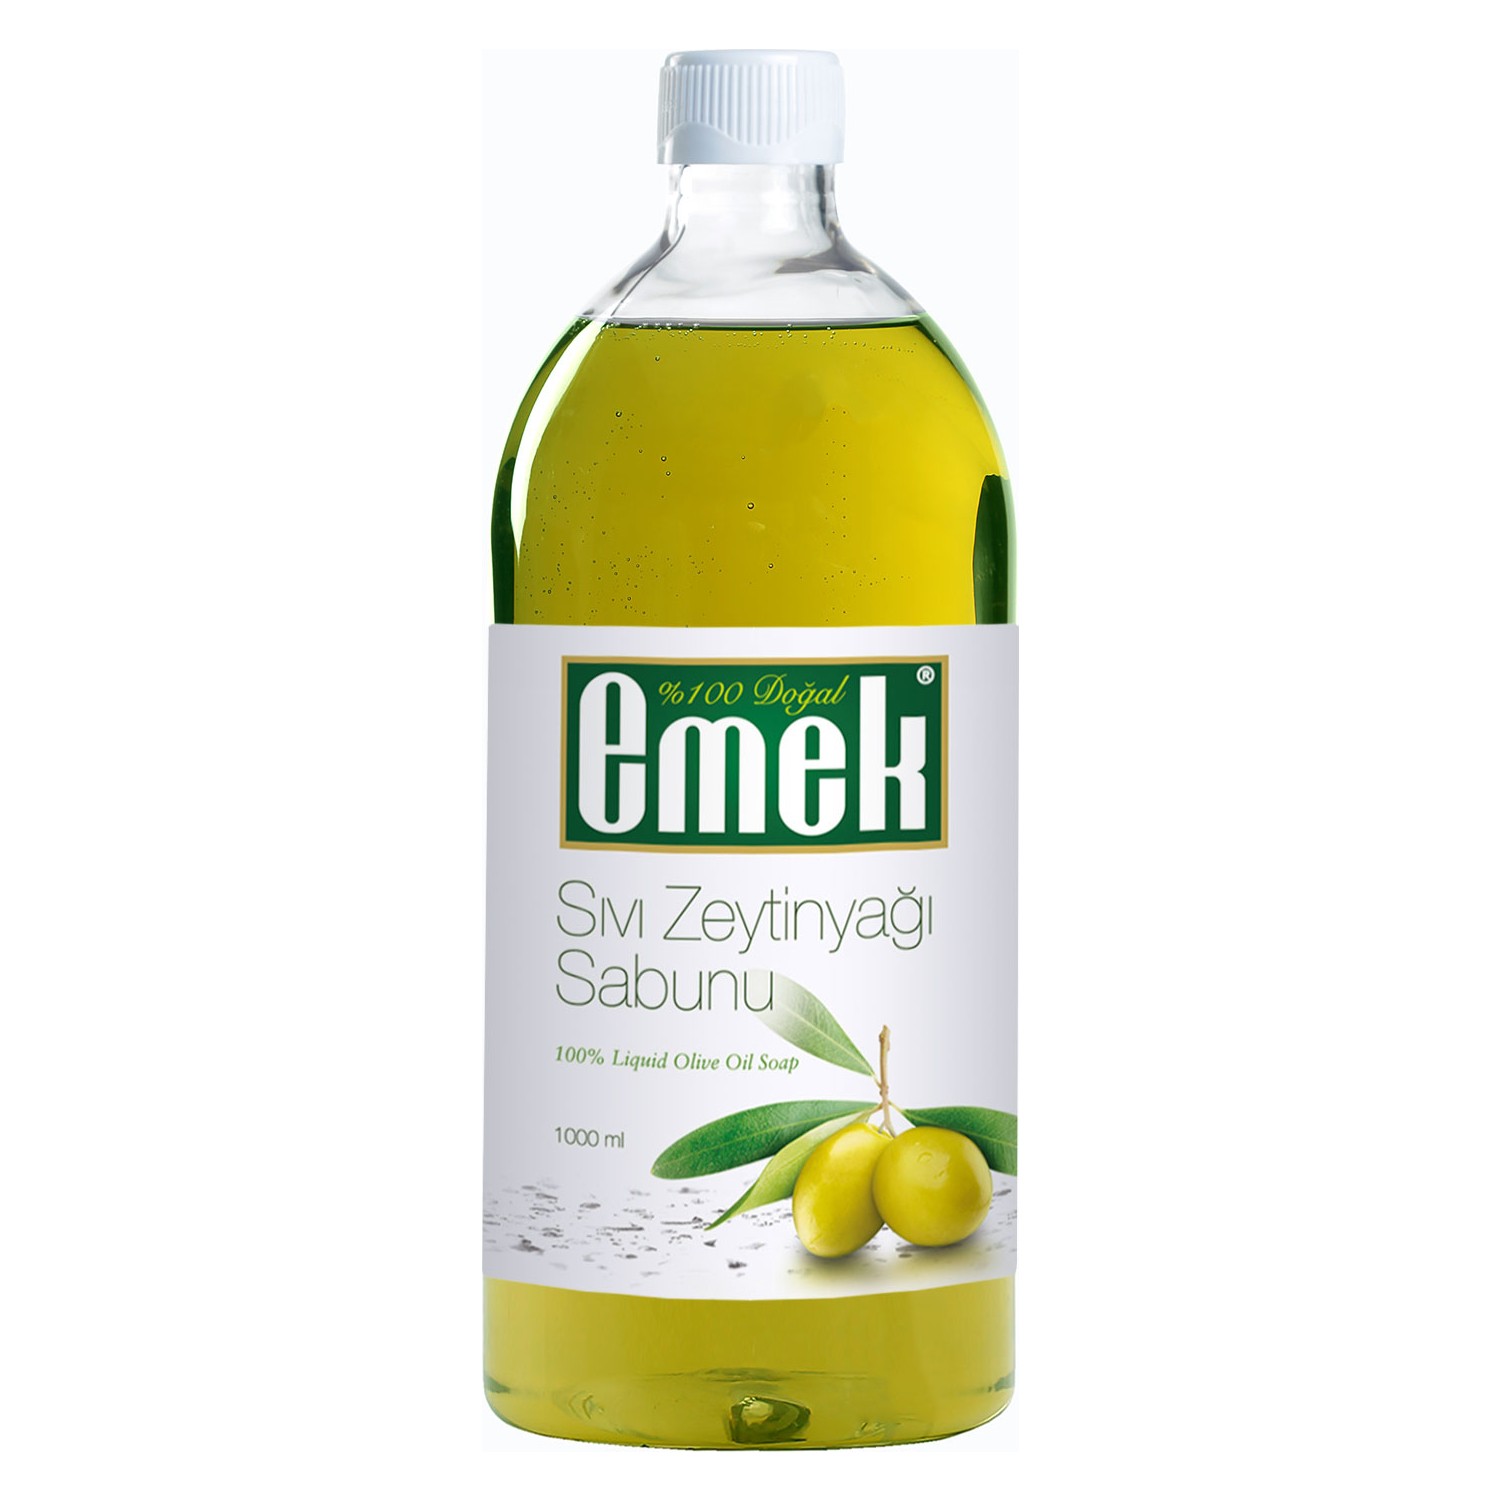 Emek Yağ- Healthy Oil Manufacturer in Turkey